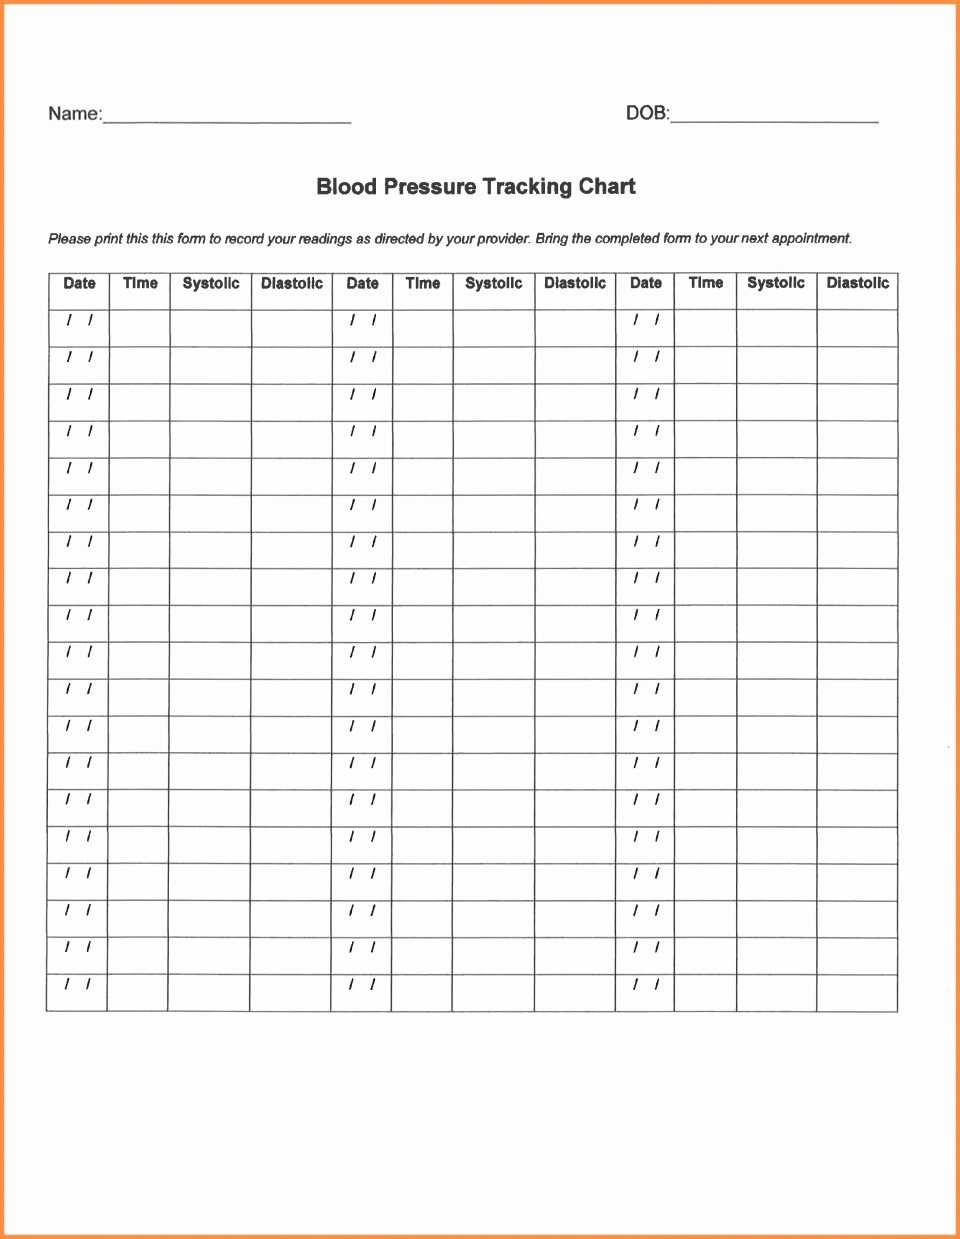 Blood Glucose Log Template New Blood Sugareadsheet Log Diabetes Glucose Diary Test